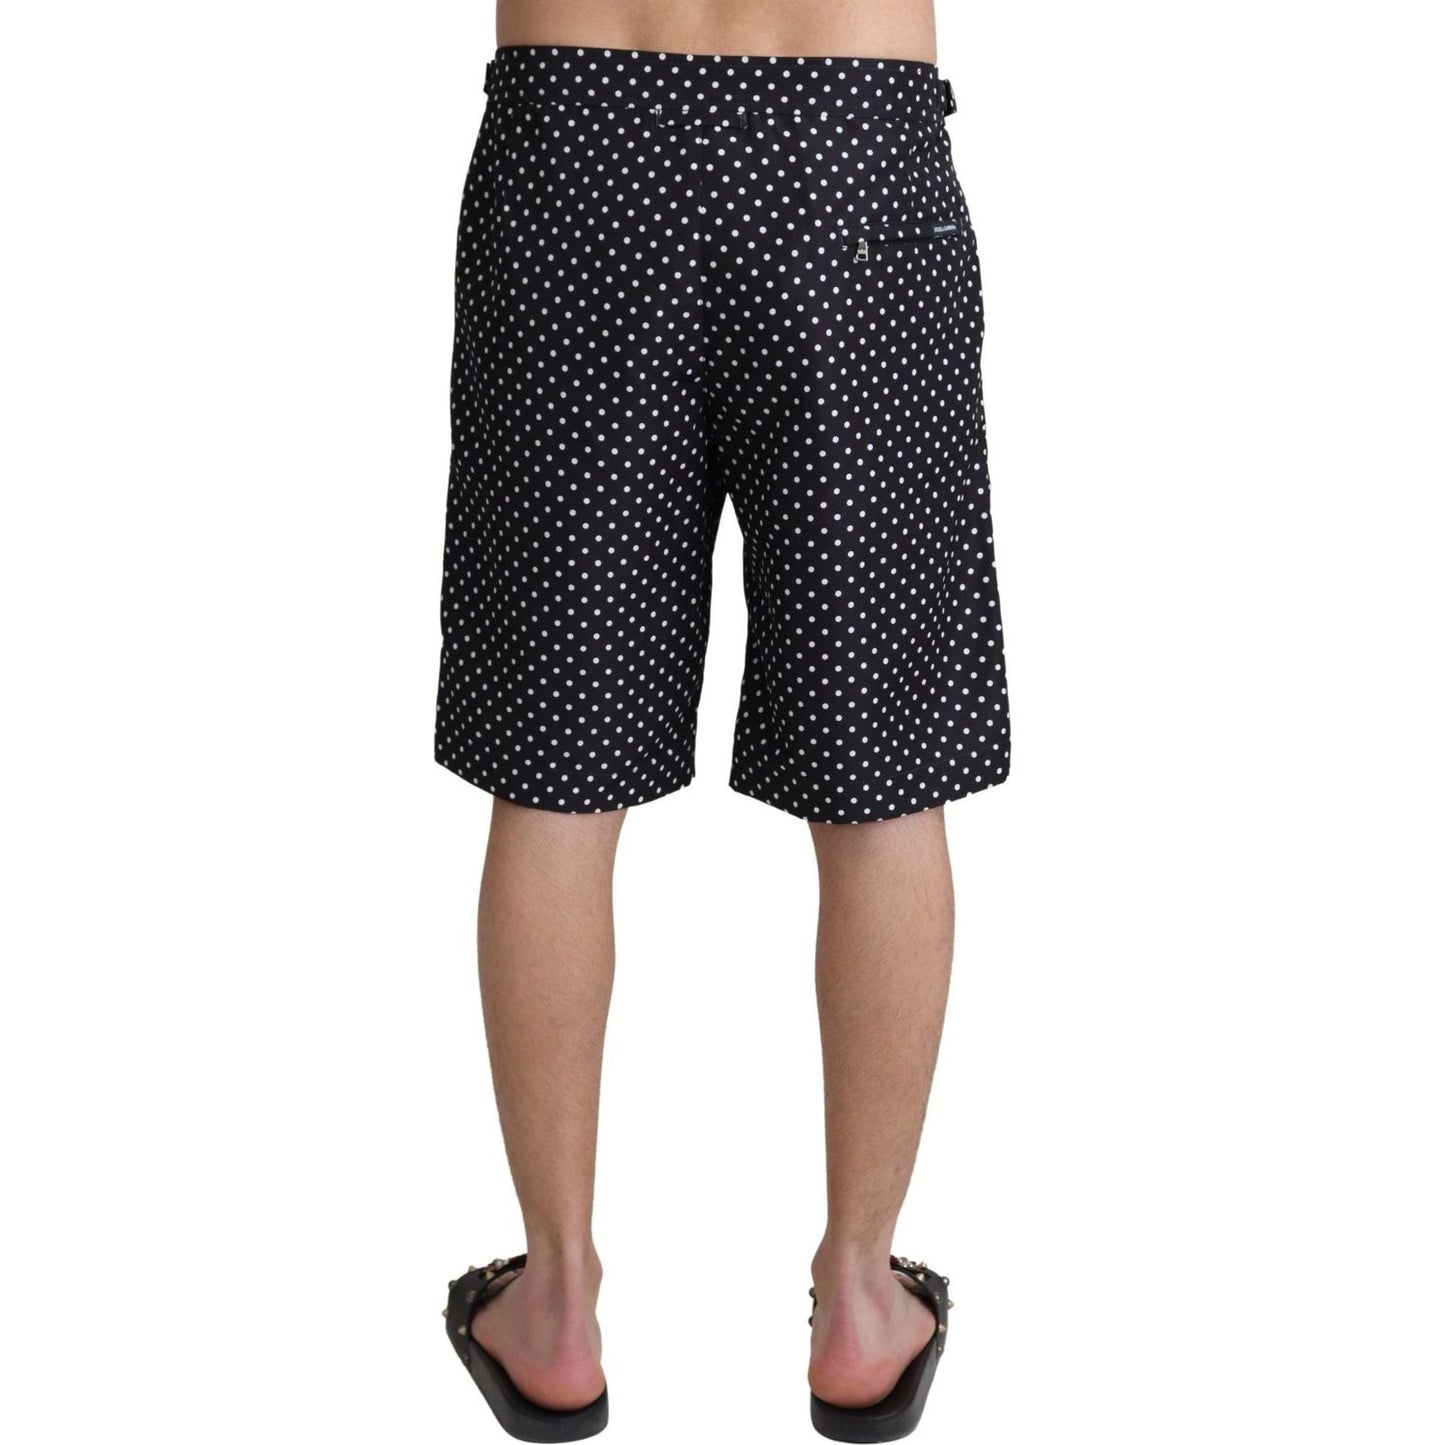 Dolce & Gabbana Polka Dot Elegance Swim Trunks Boxer black-polka-dots-beachwear-shorts-swimwear